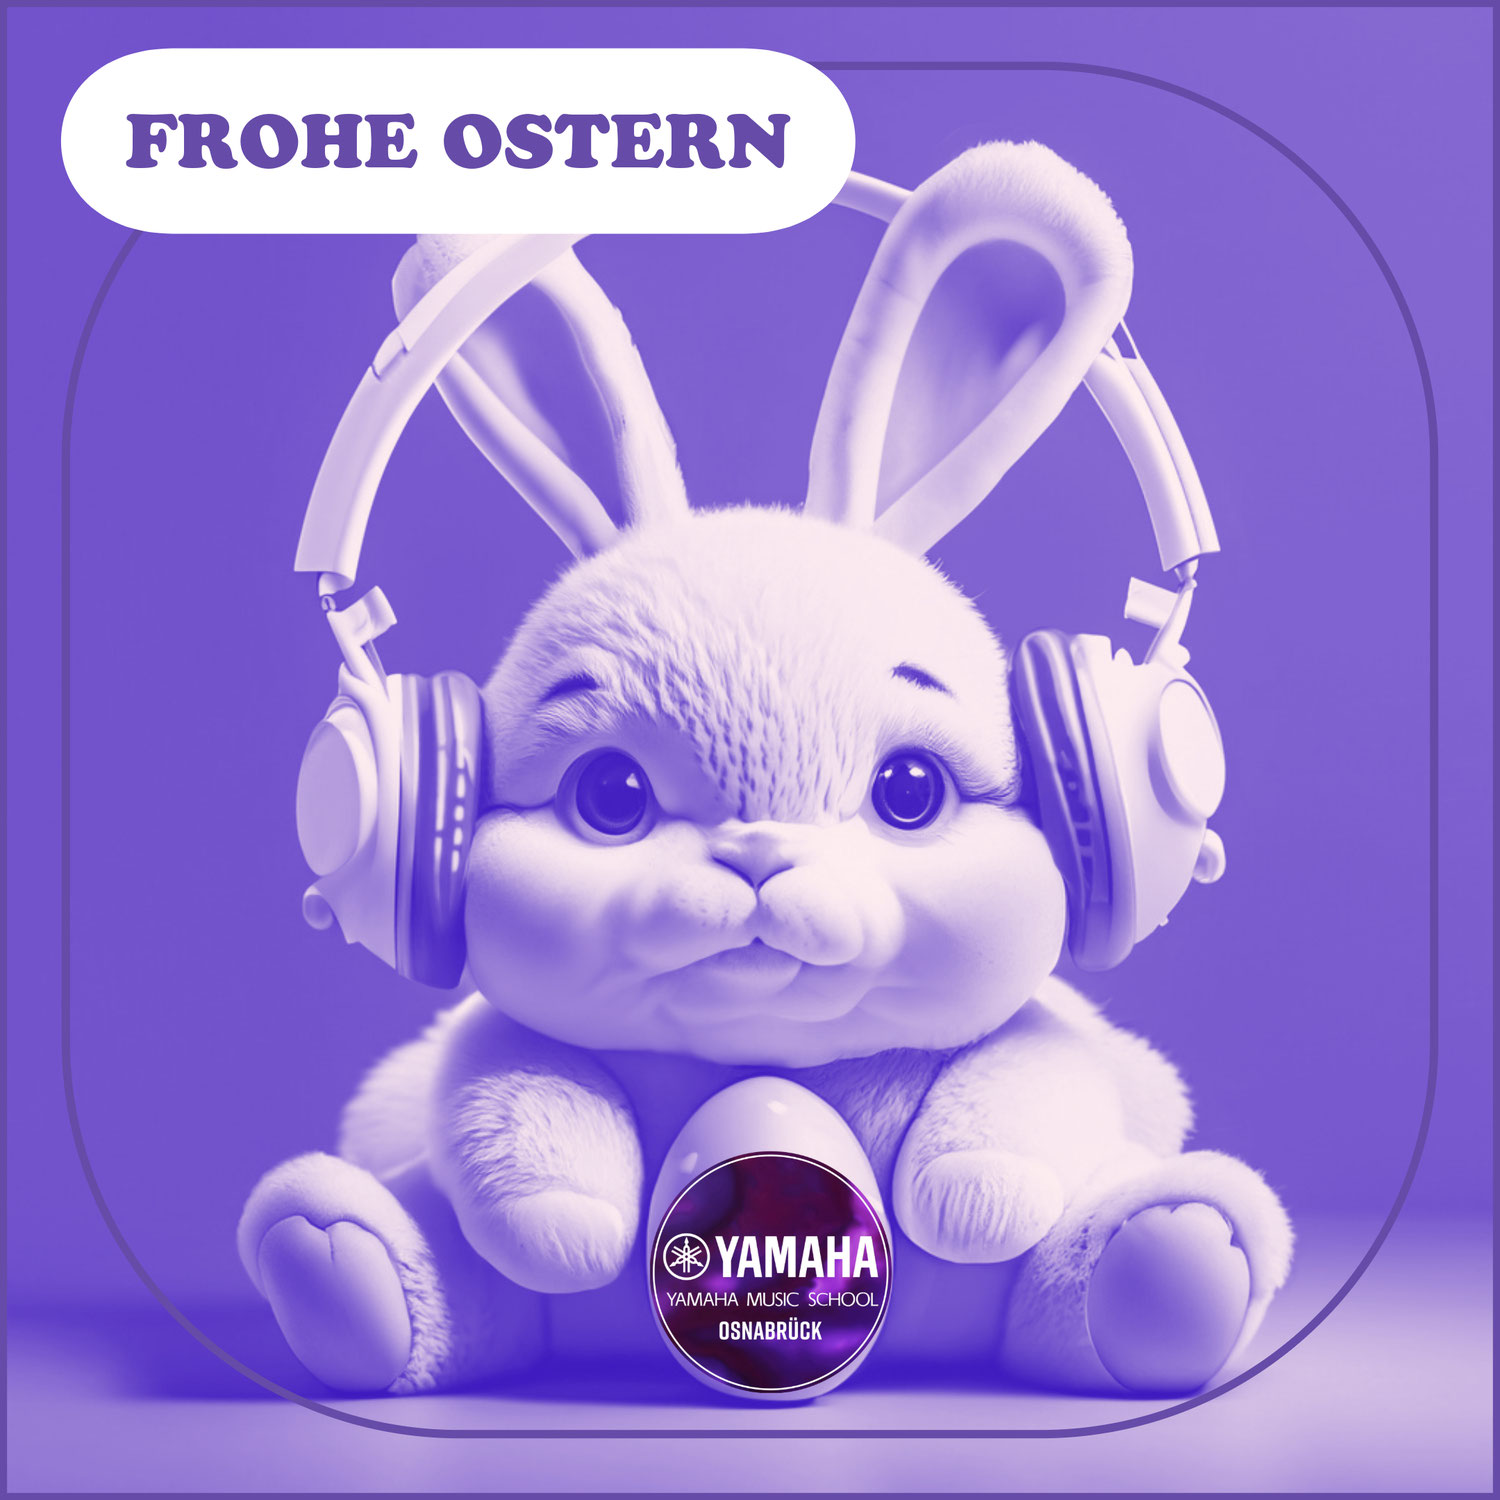 Frohe Ostern von der Yamaha Musikschule Osnabrück!